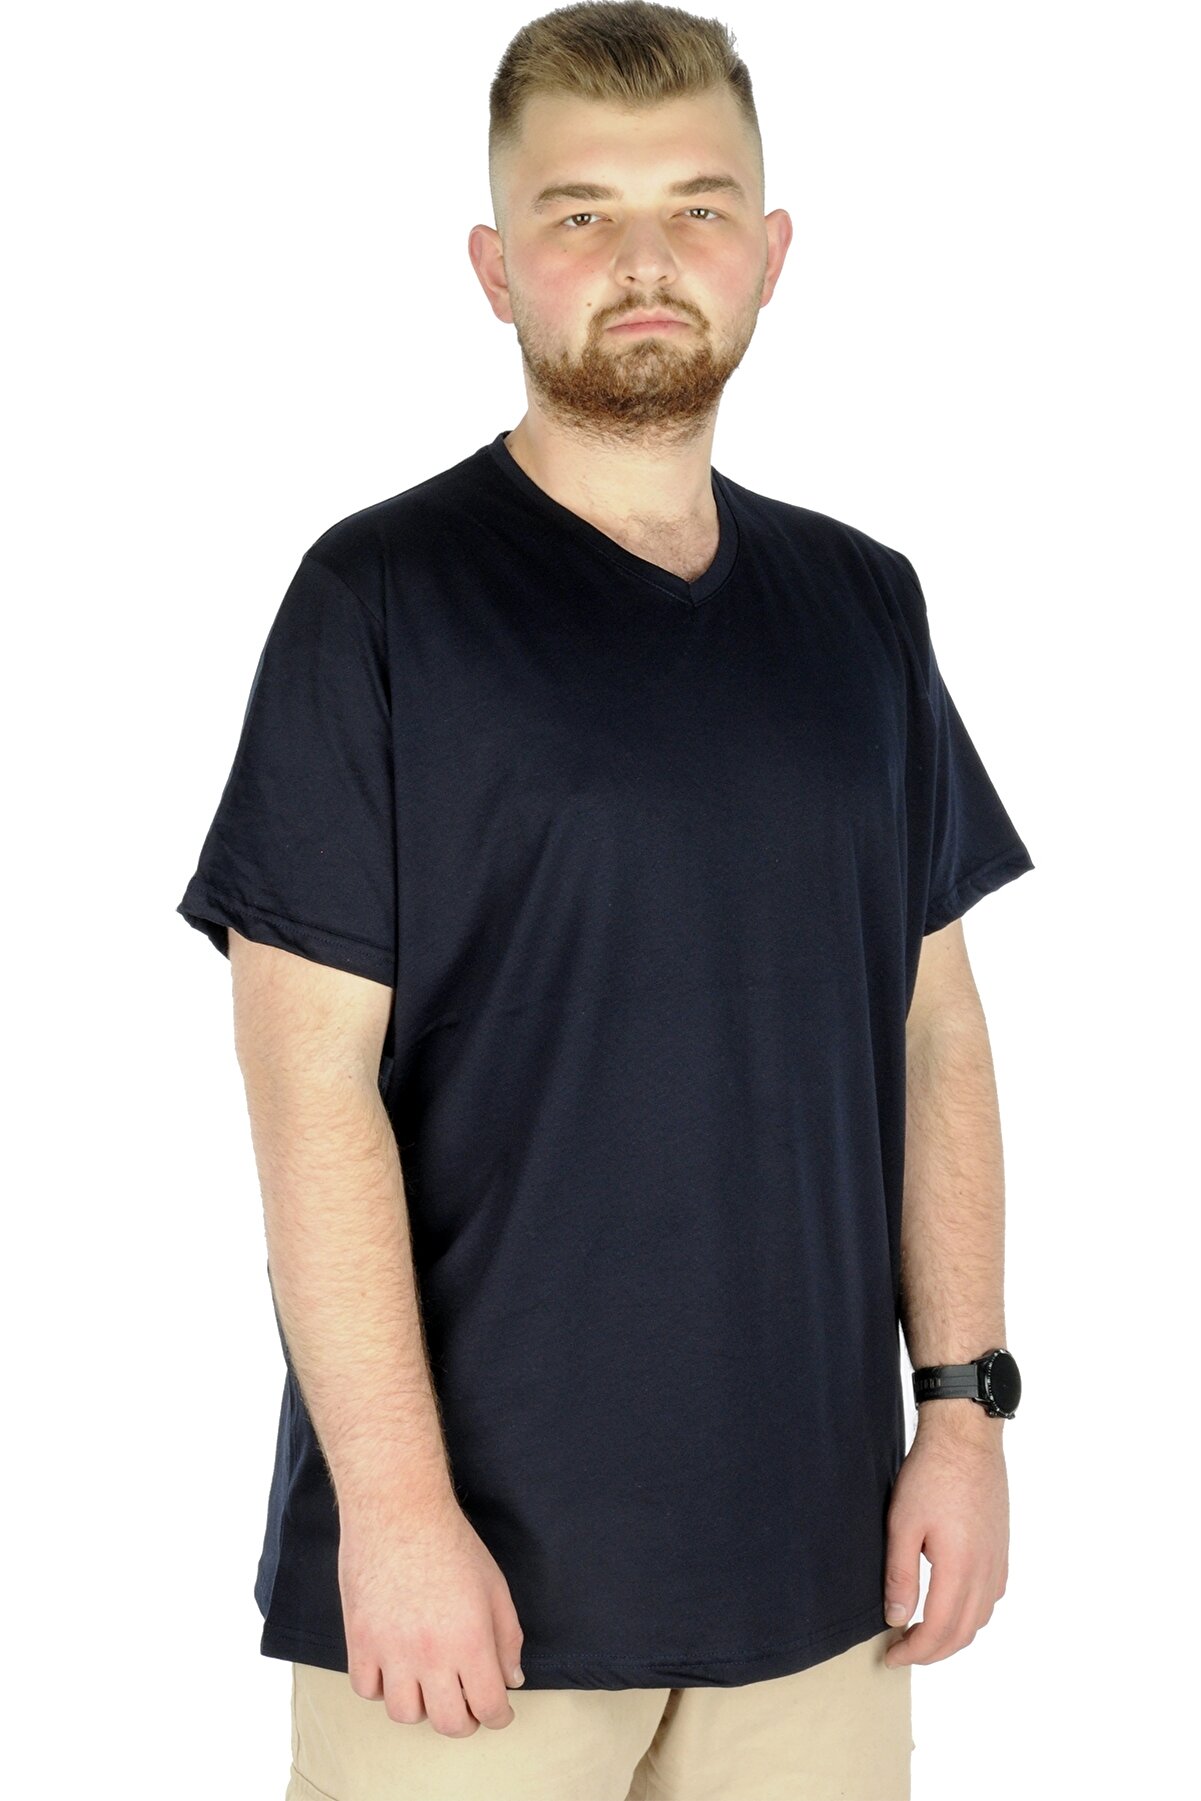 Modexl Mode Xl Büyük Beden Erkek Tshirt V Yaka 20032 Lacivert